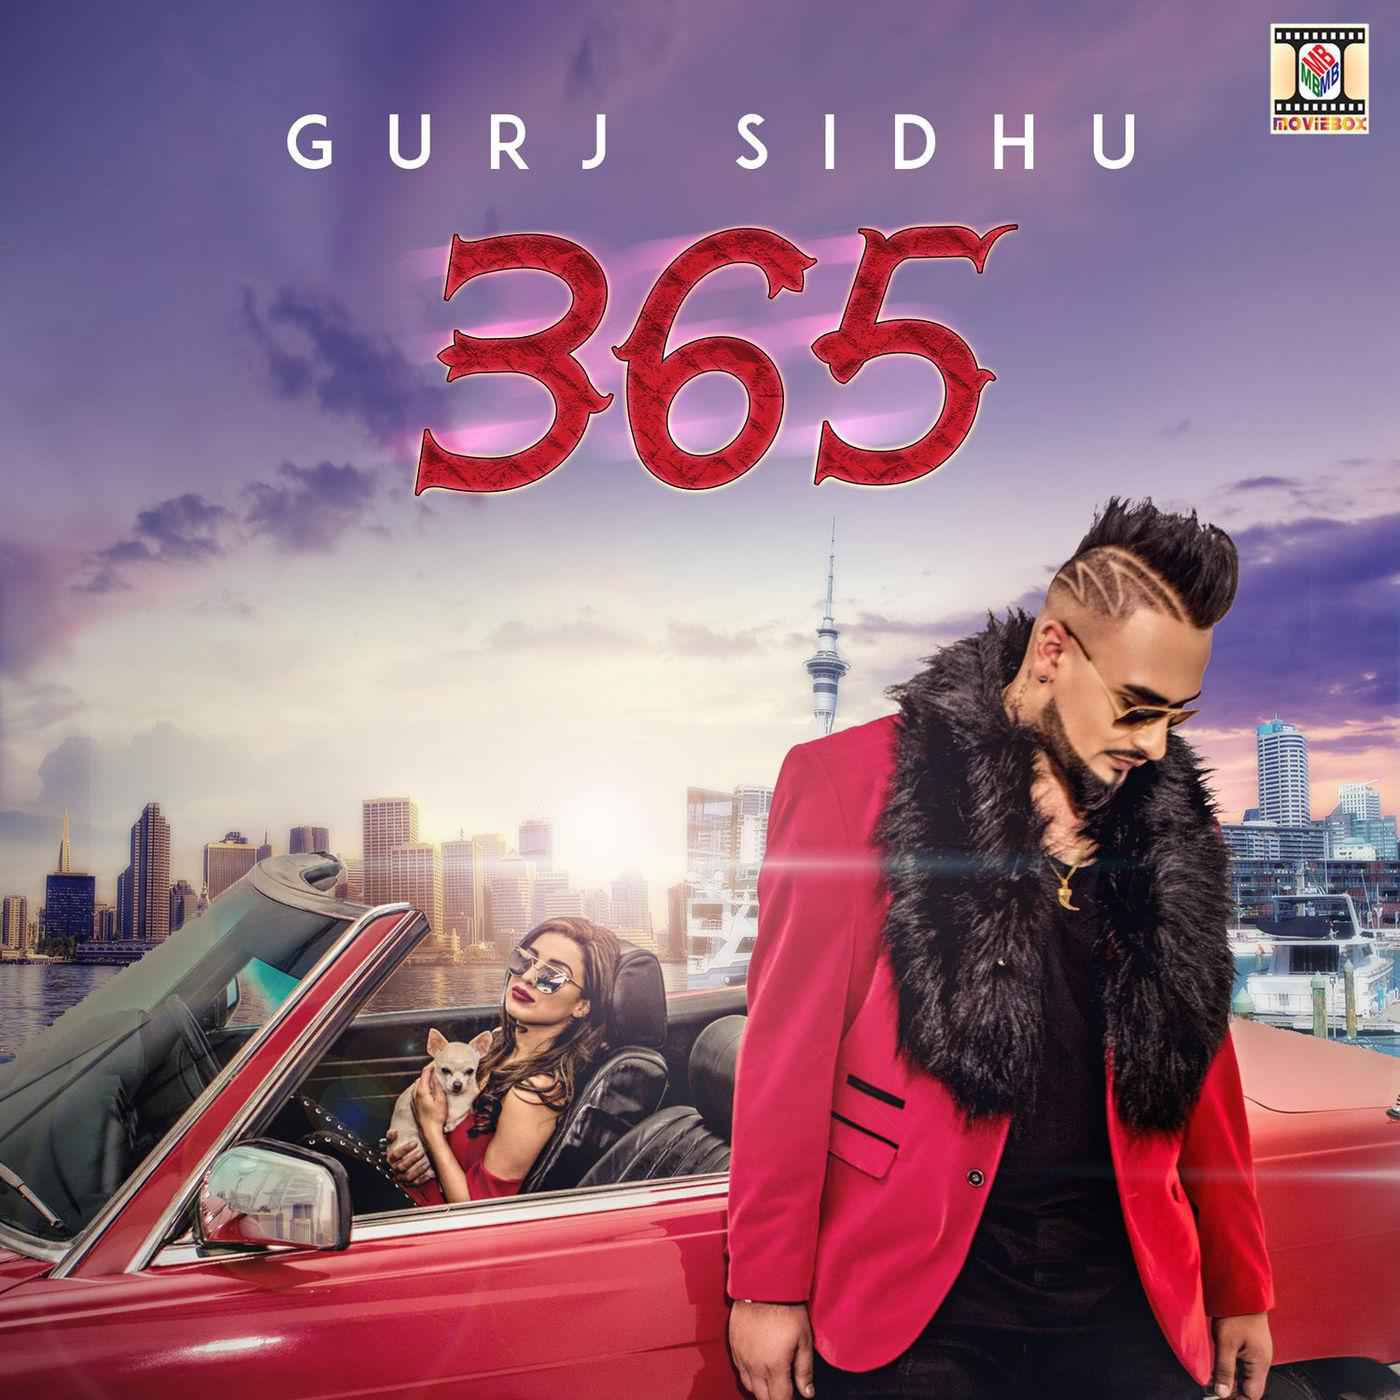 365 gurj sidhu Status Clip full movie download